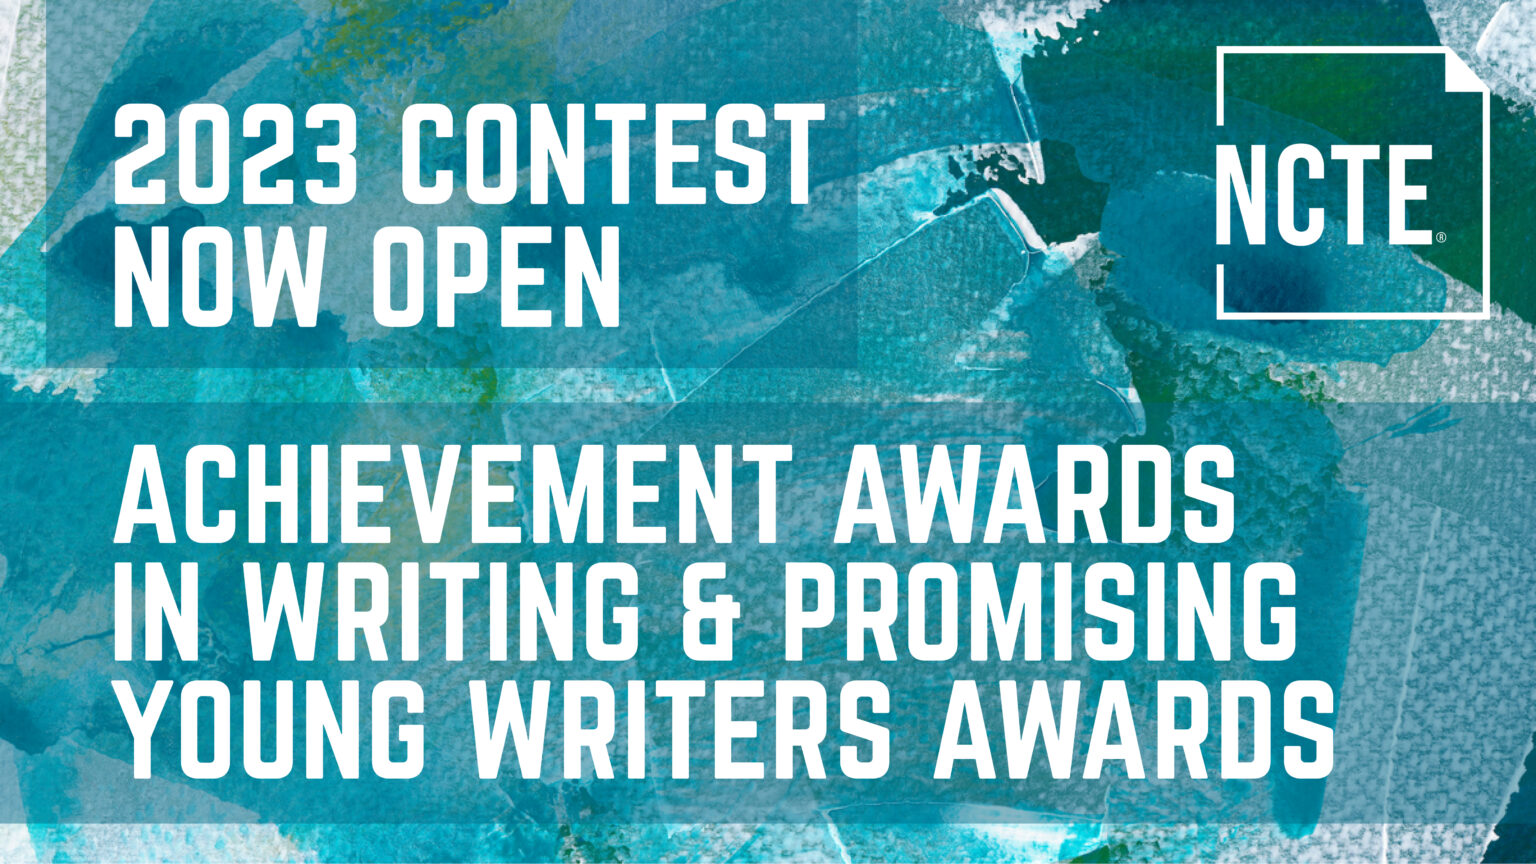 Achievement Awards in Writing